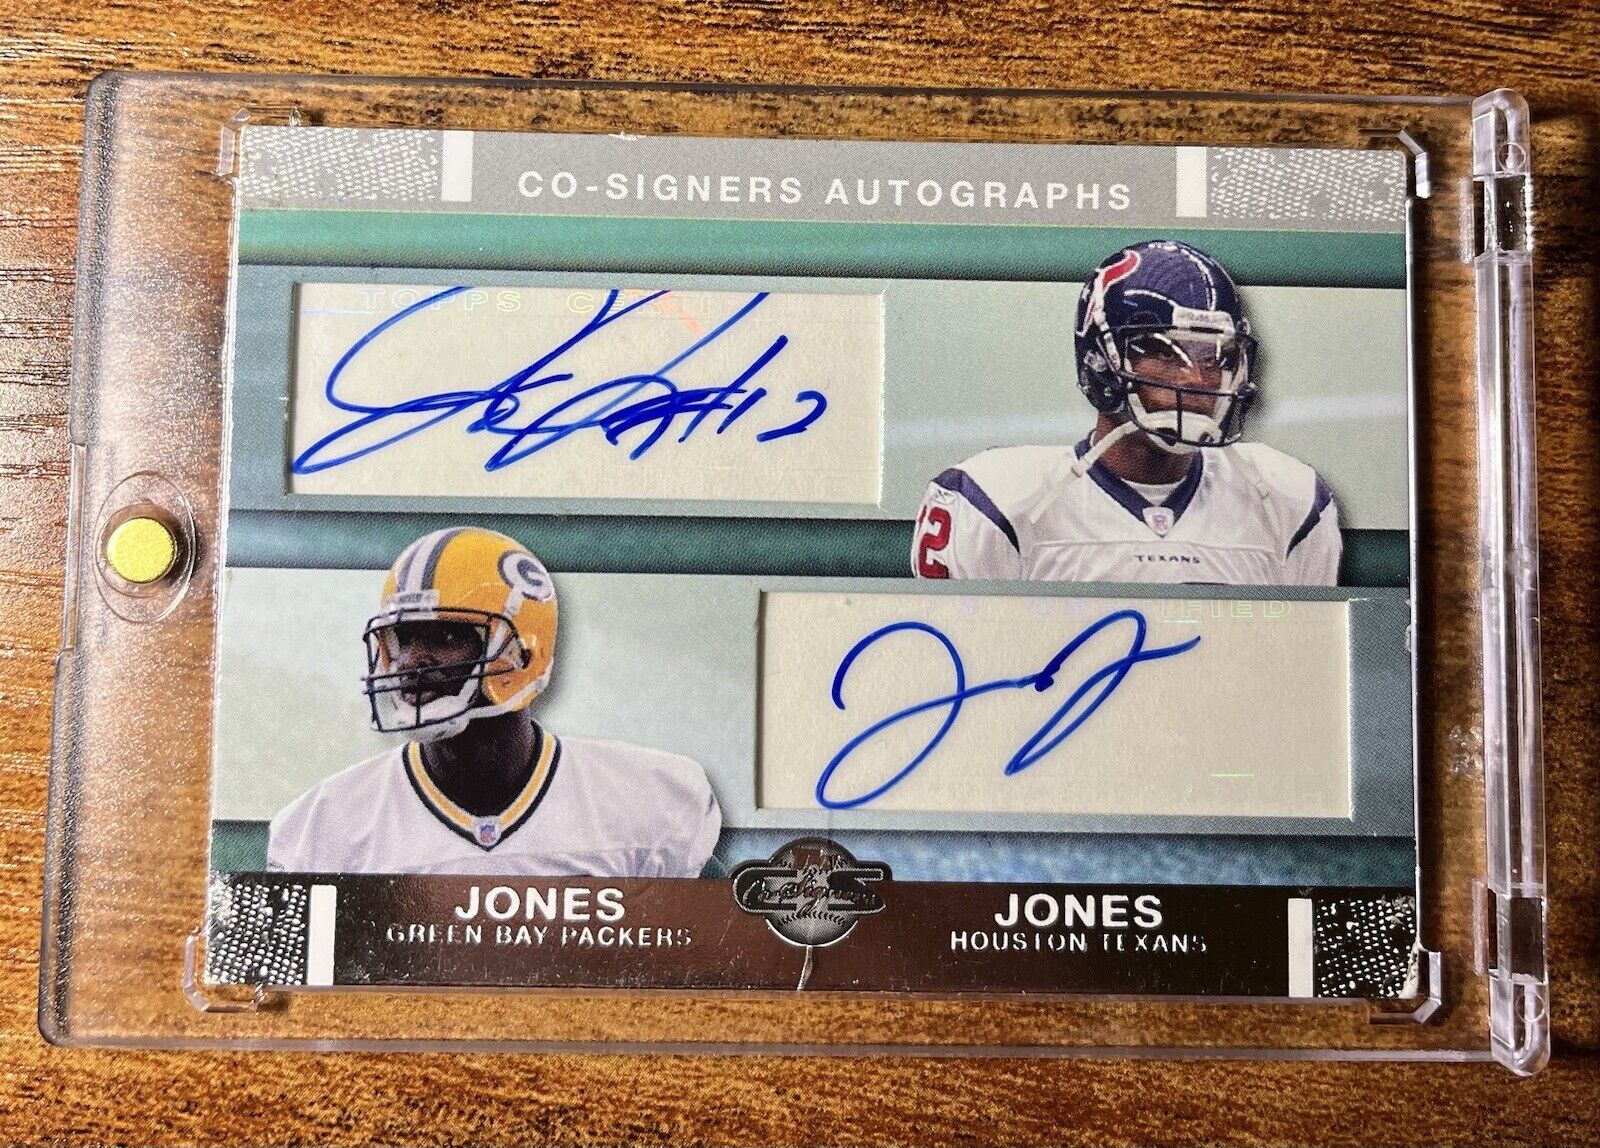 2007 topps NFL- James jones and Jacoby jones rookie card superbowl champs, SSP🔥